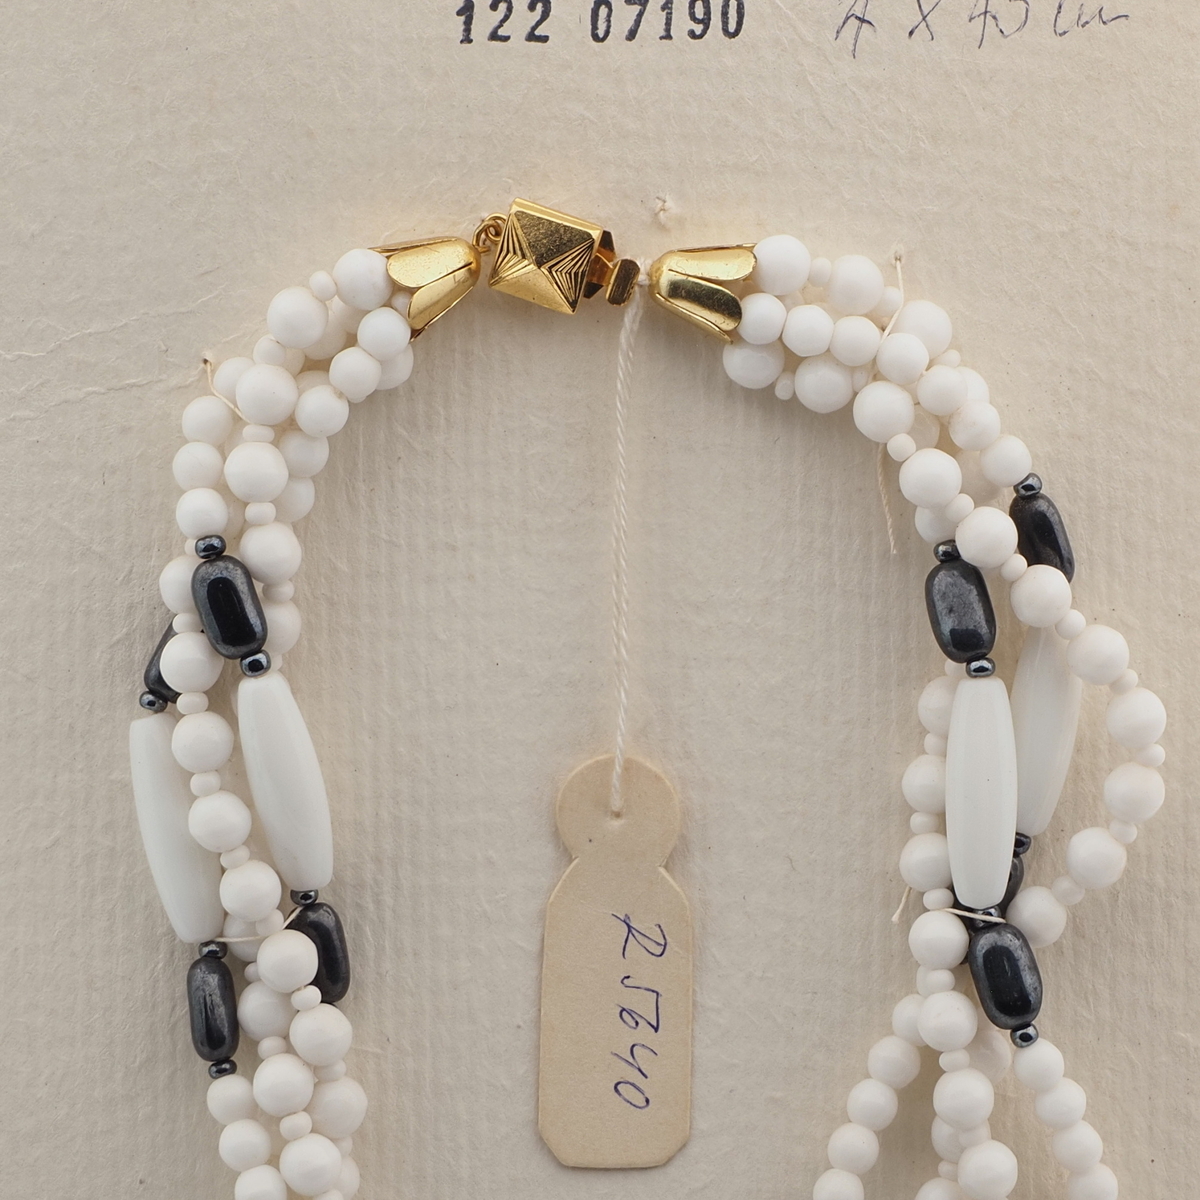 Vintage Czech 3 strand necklace white hematite glass beads